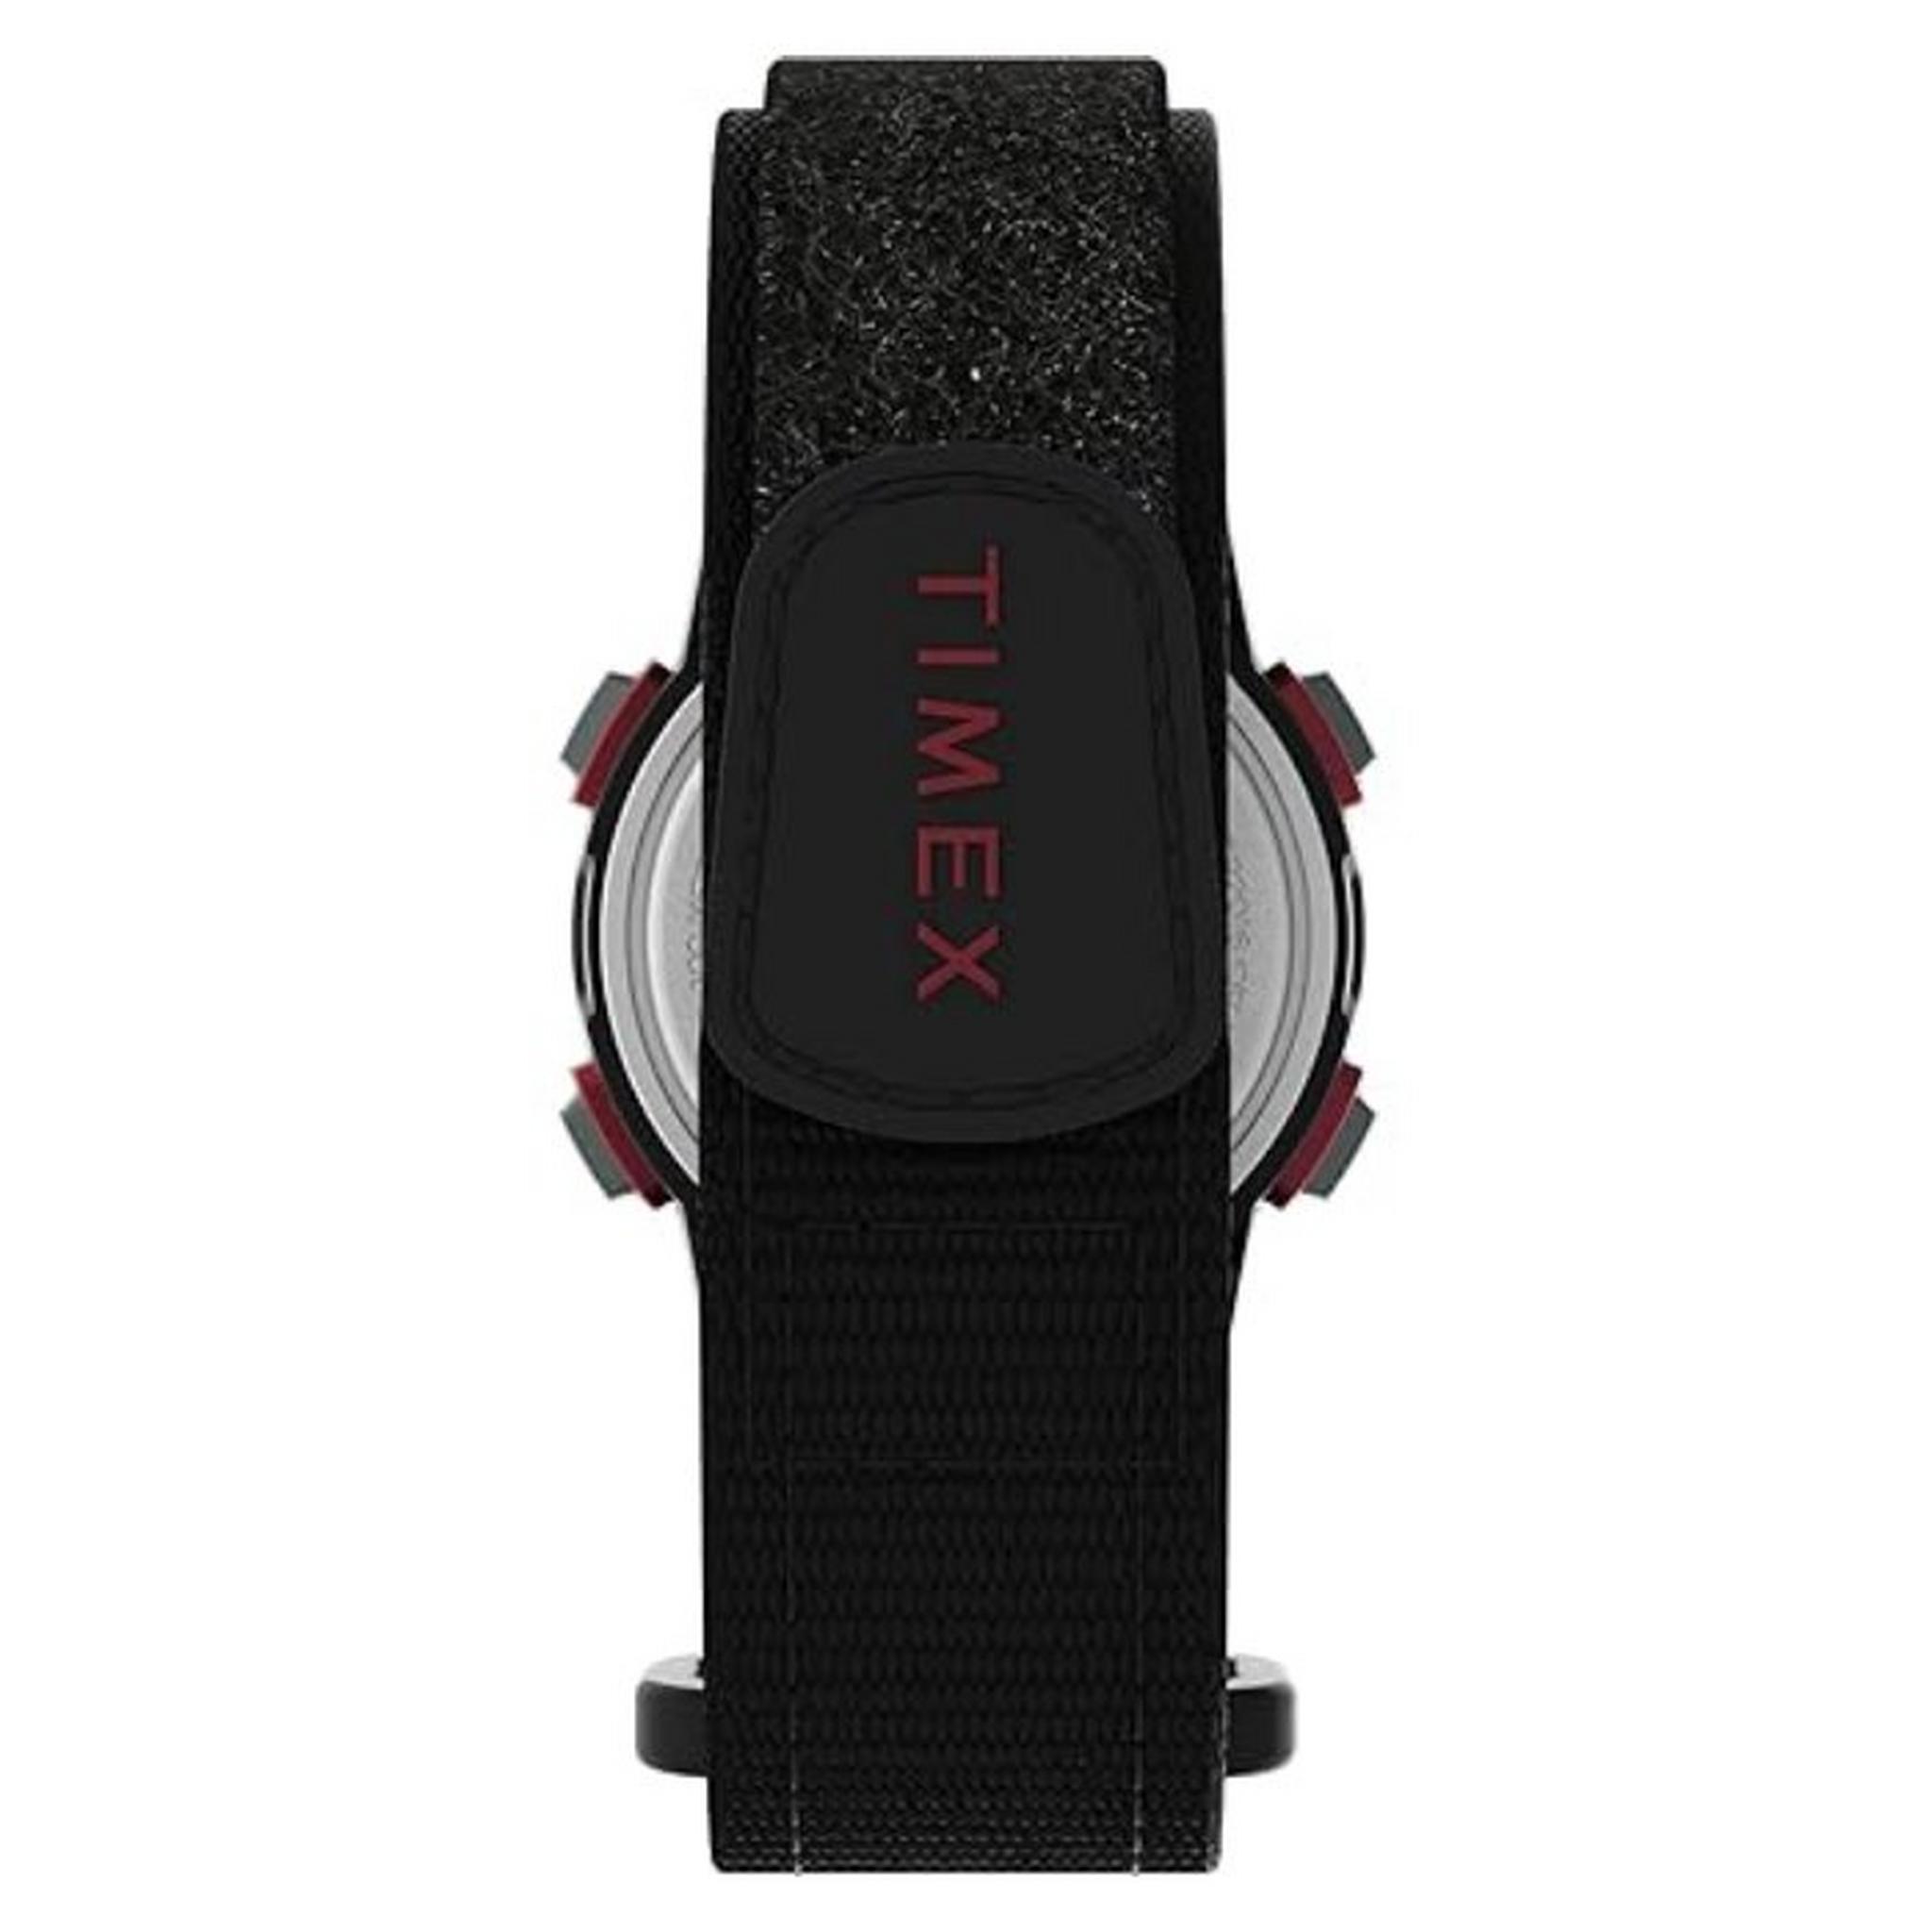 Timex Expedition CAT Unisex Watch, Digital, 33mm, Fabric Strap, TW4B29000VM – Black